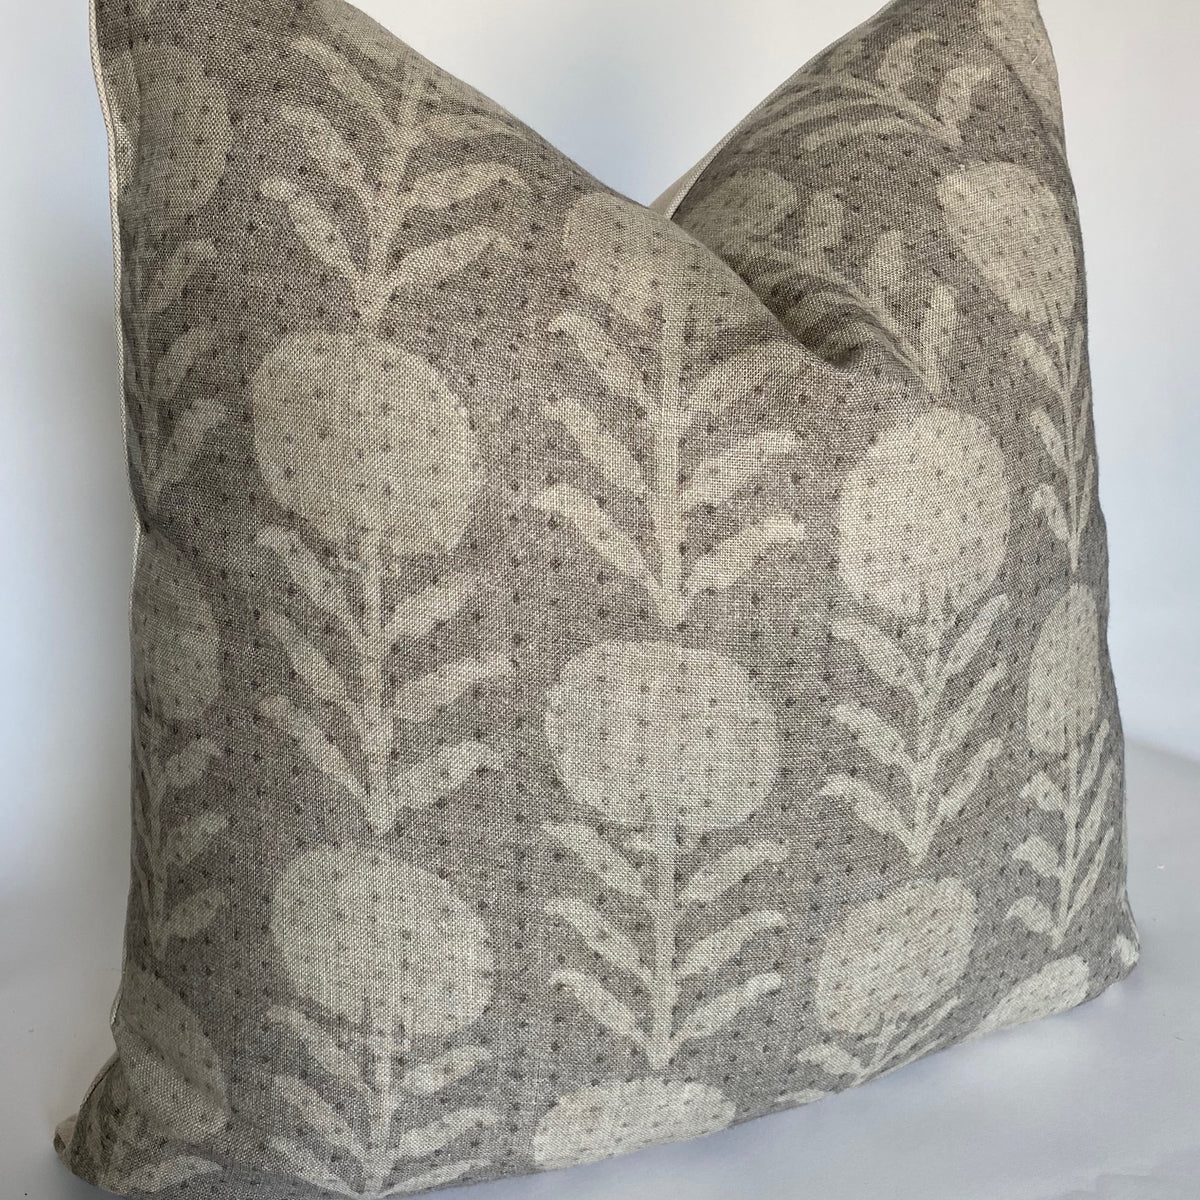 Zinnia Designer Pillow Cover in Sand